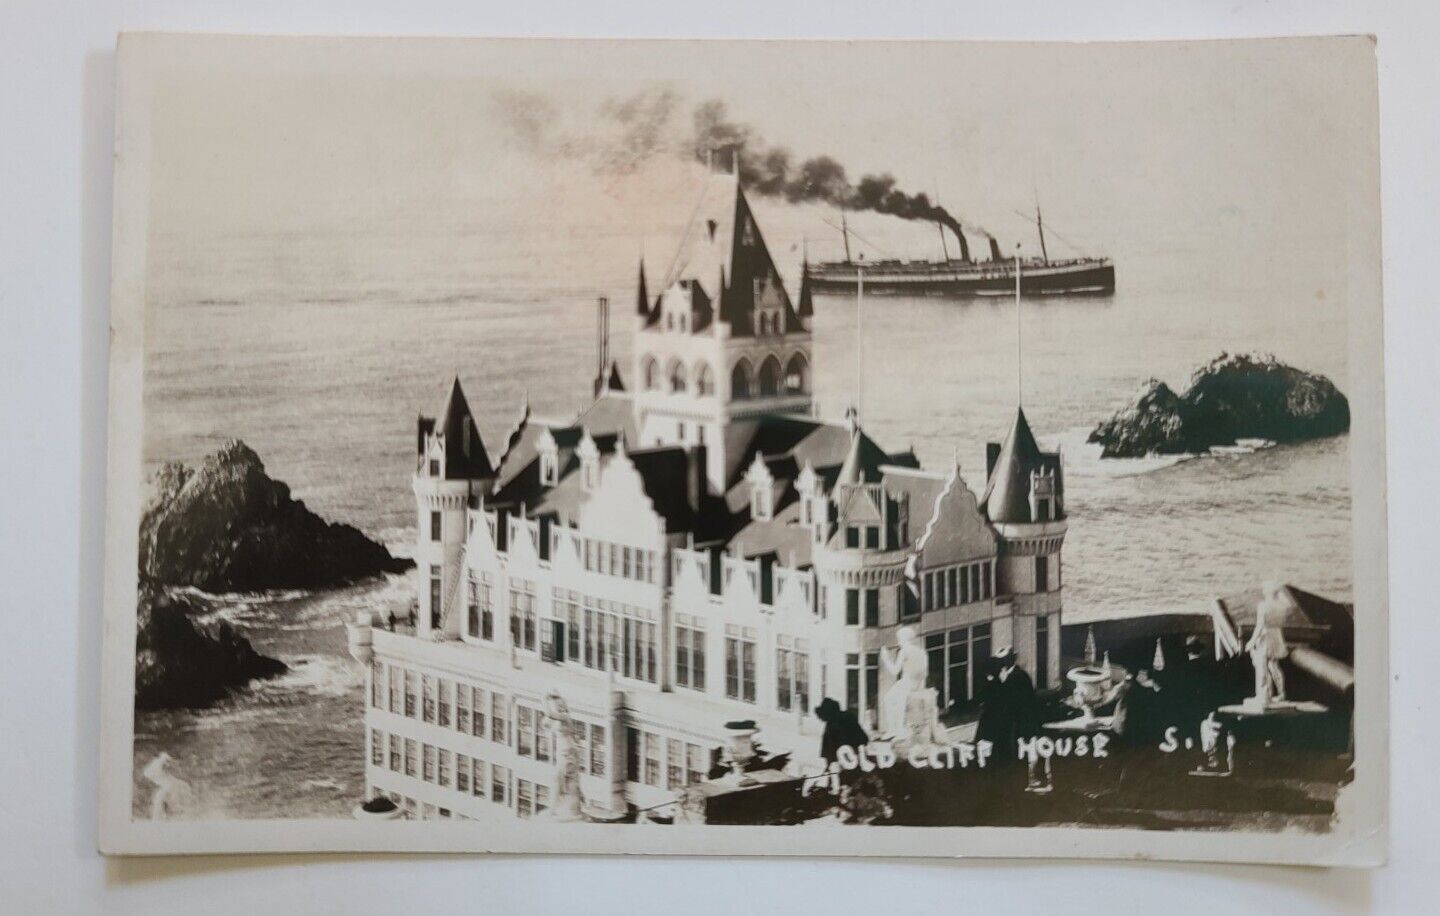 Cliff House S.F. San Francisco Postcard RPPC CA Steam Ship Unposted B&W 1900s